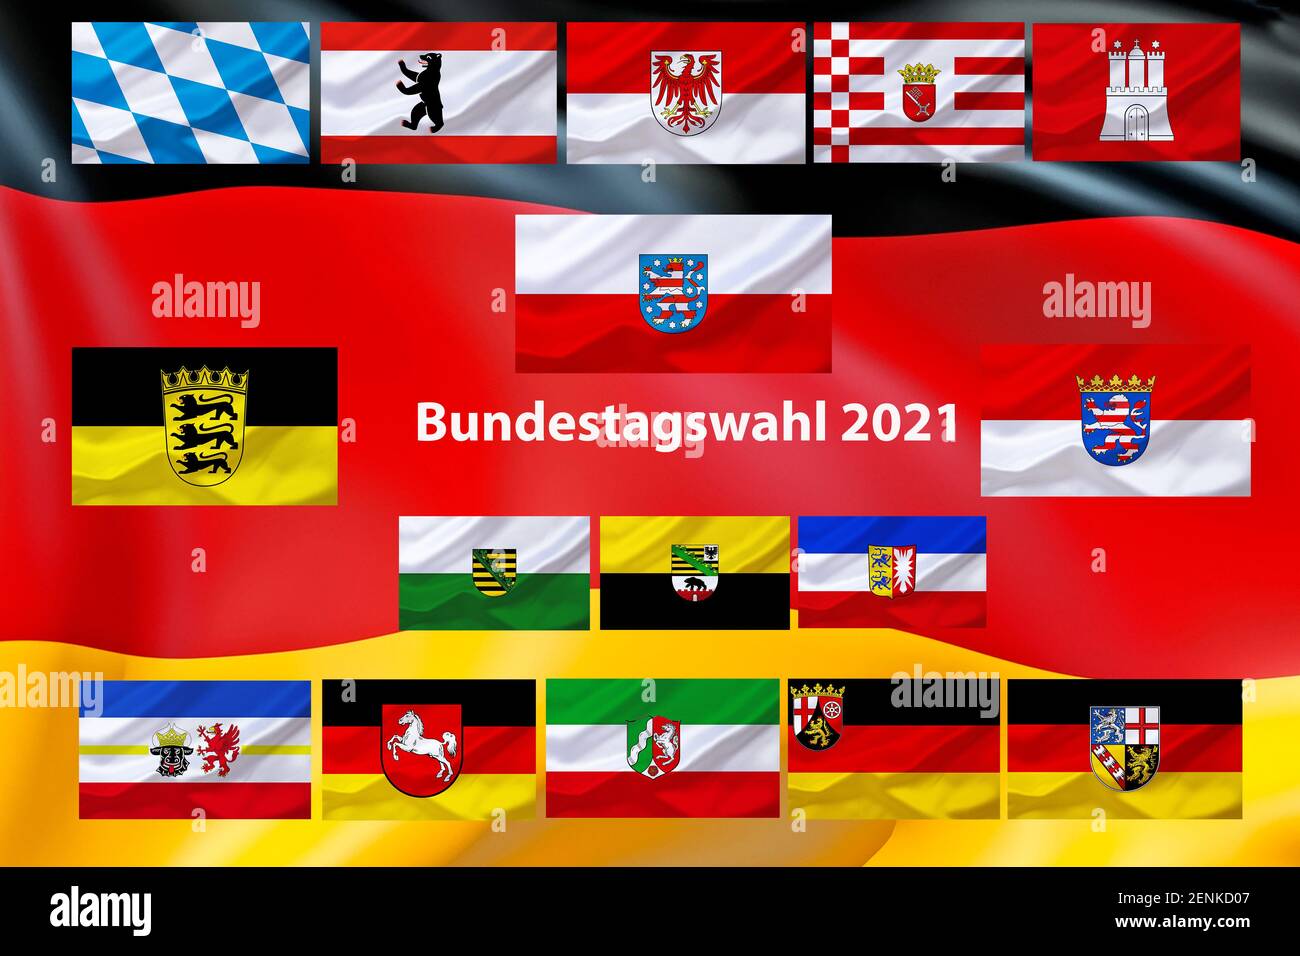 Bundestagswahl 2021, Flagge, Flaggen, Logow, Wappen, Bundesländer, Foto de stock